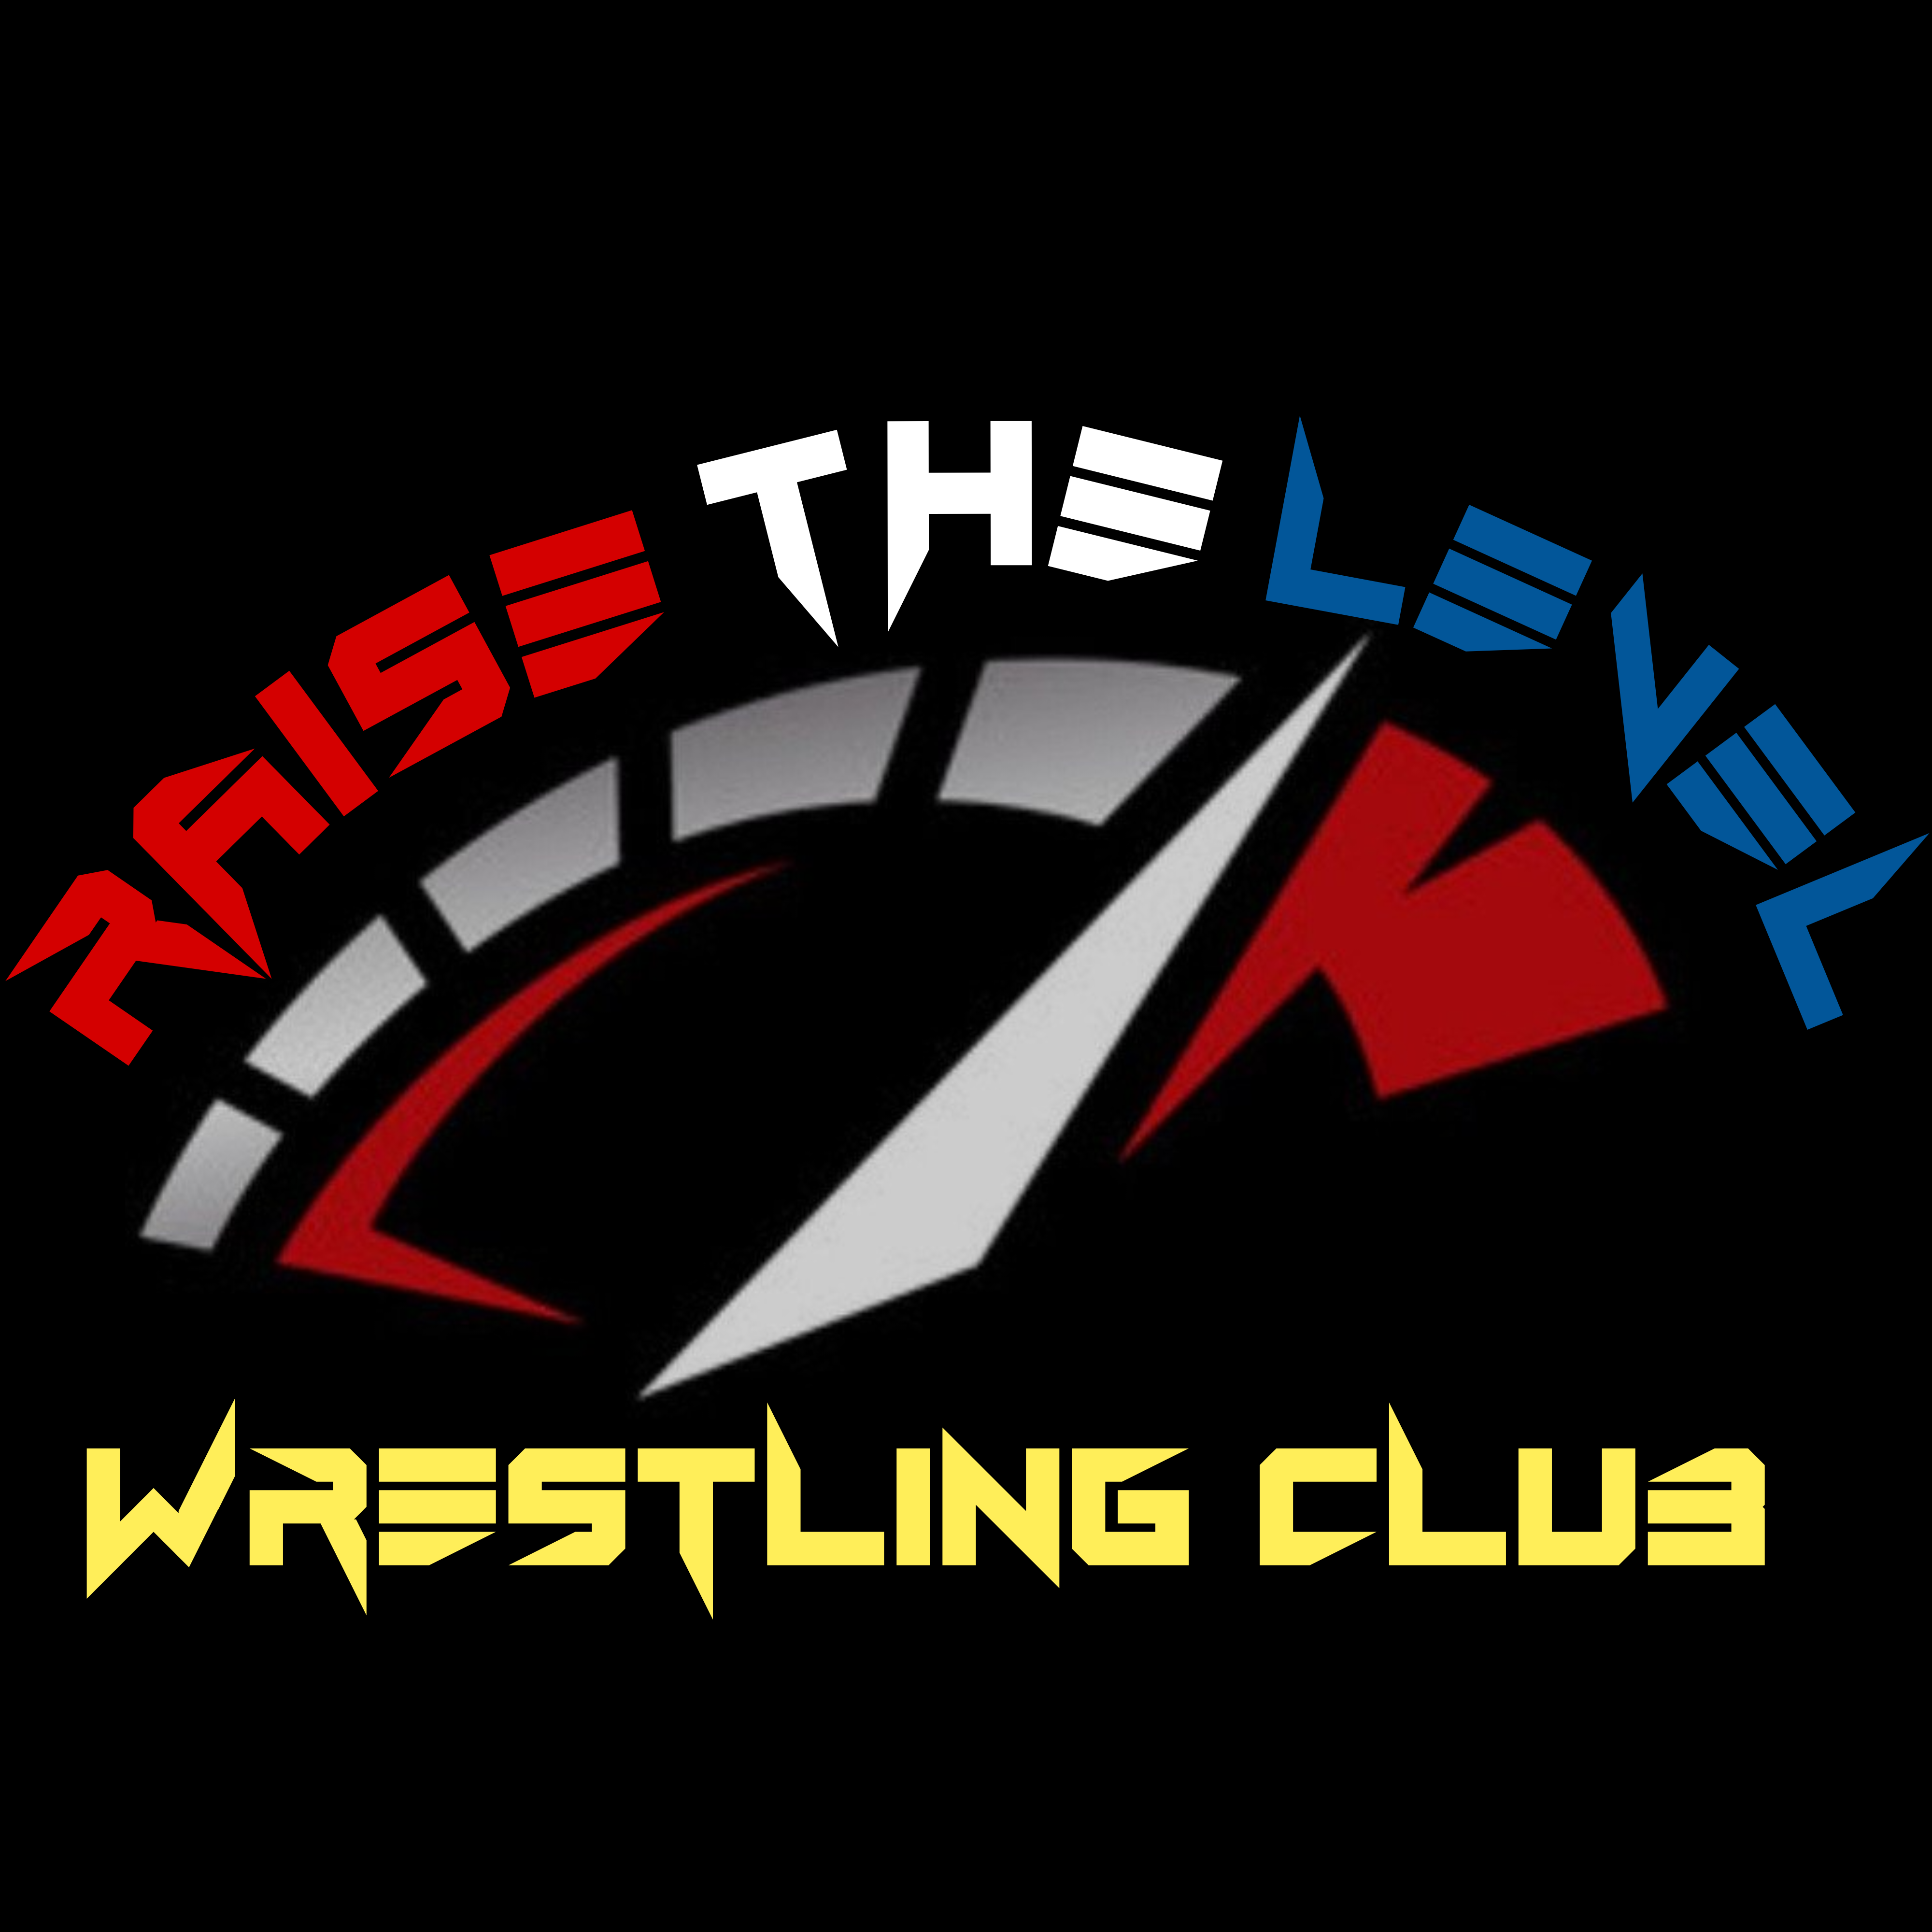 Raise the Level Wrestling Club